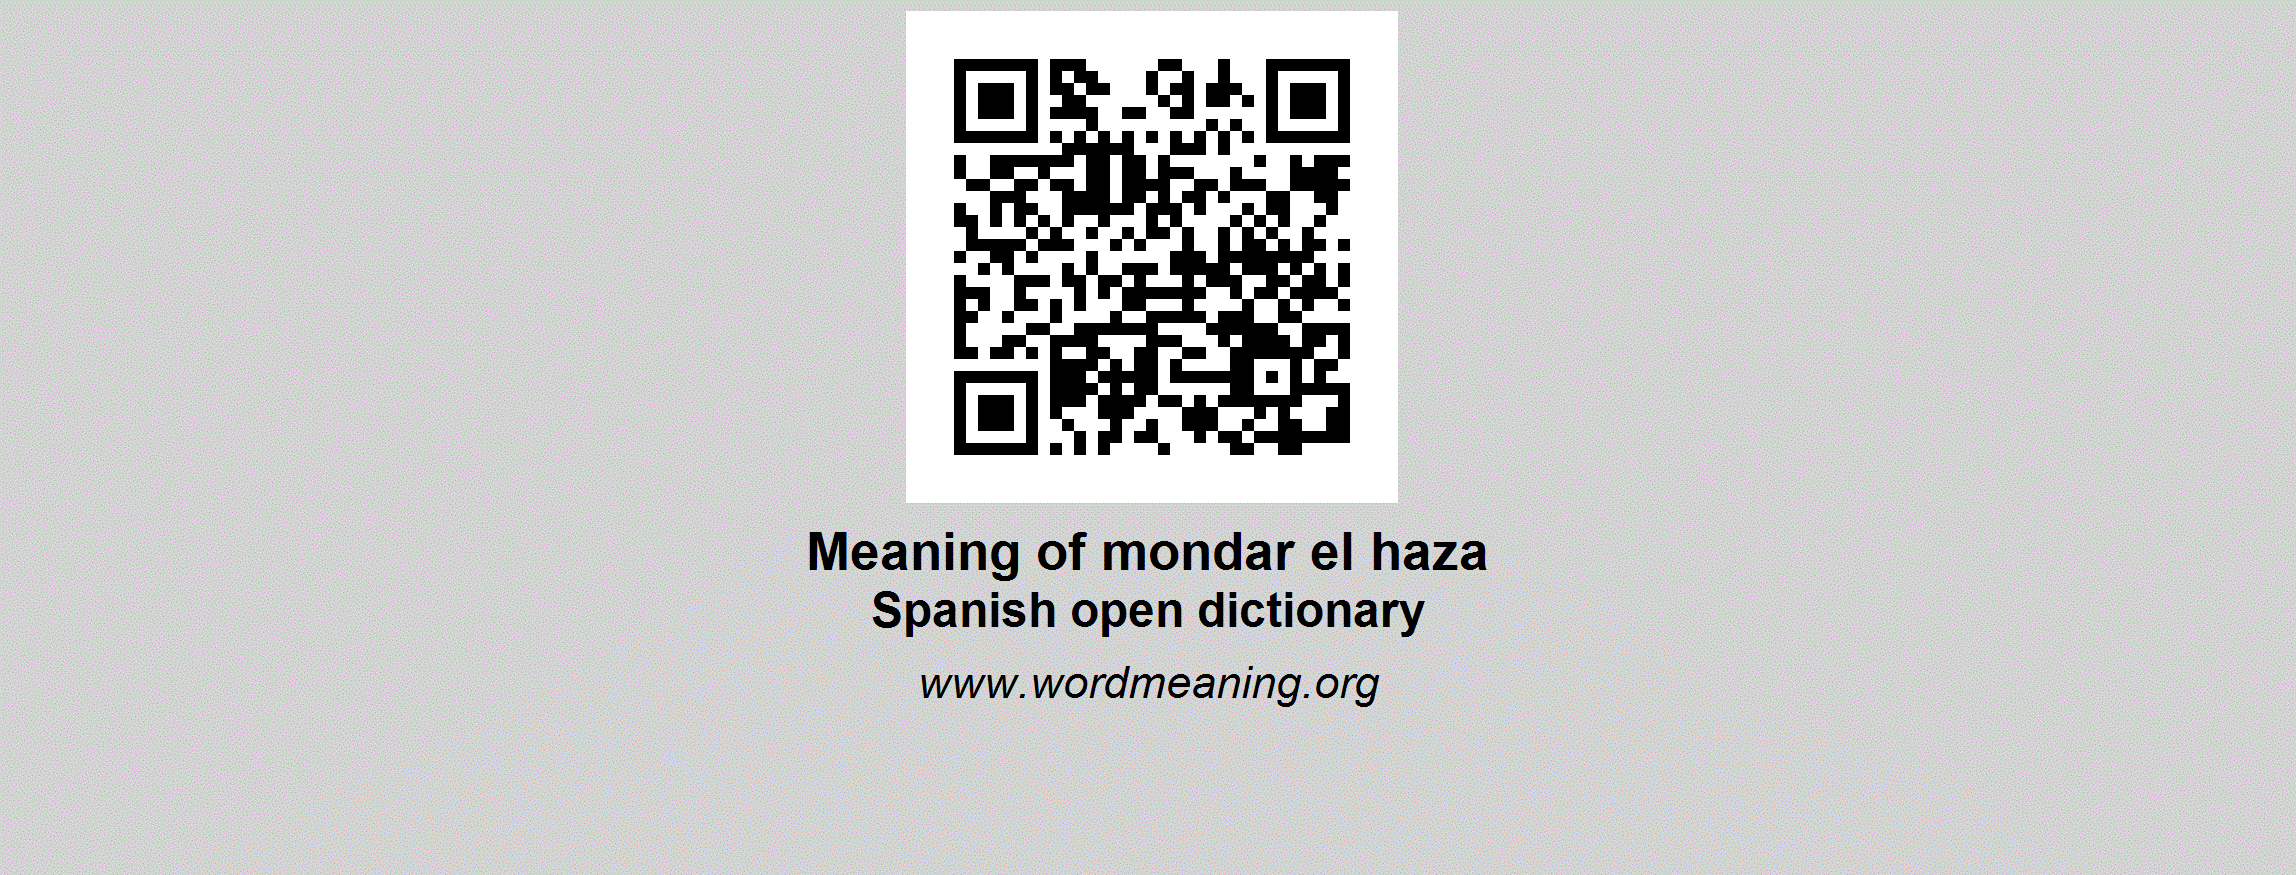 MONDAR EL HAZA  Spanish open dictionary